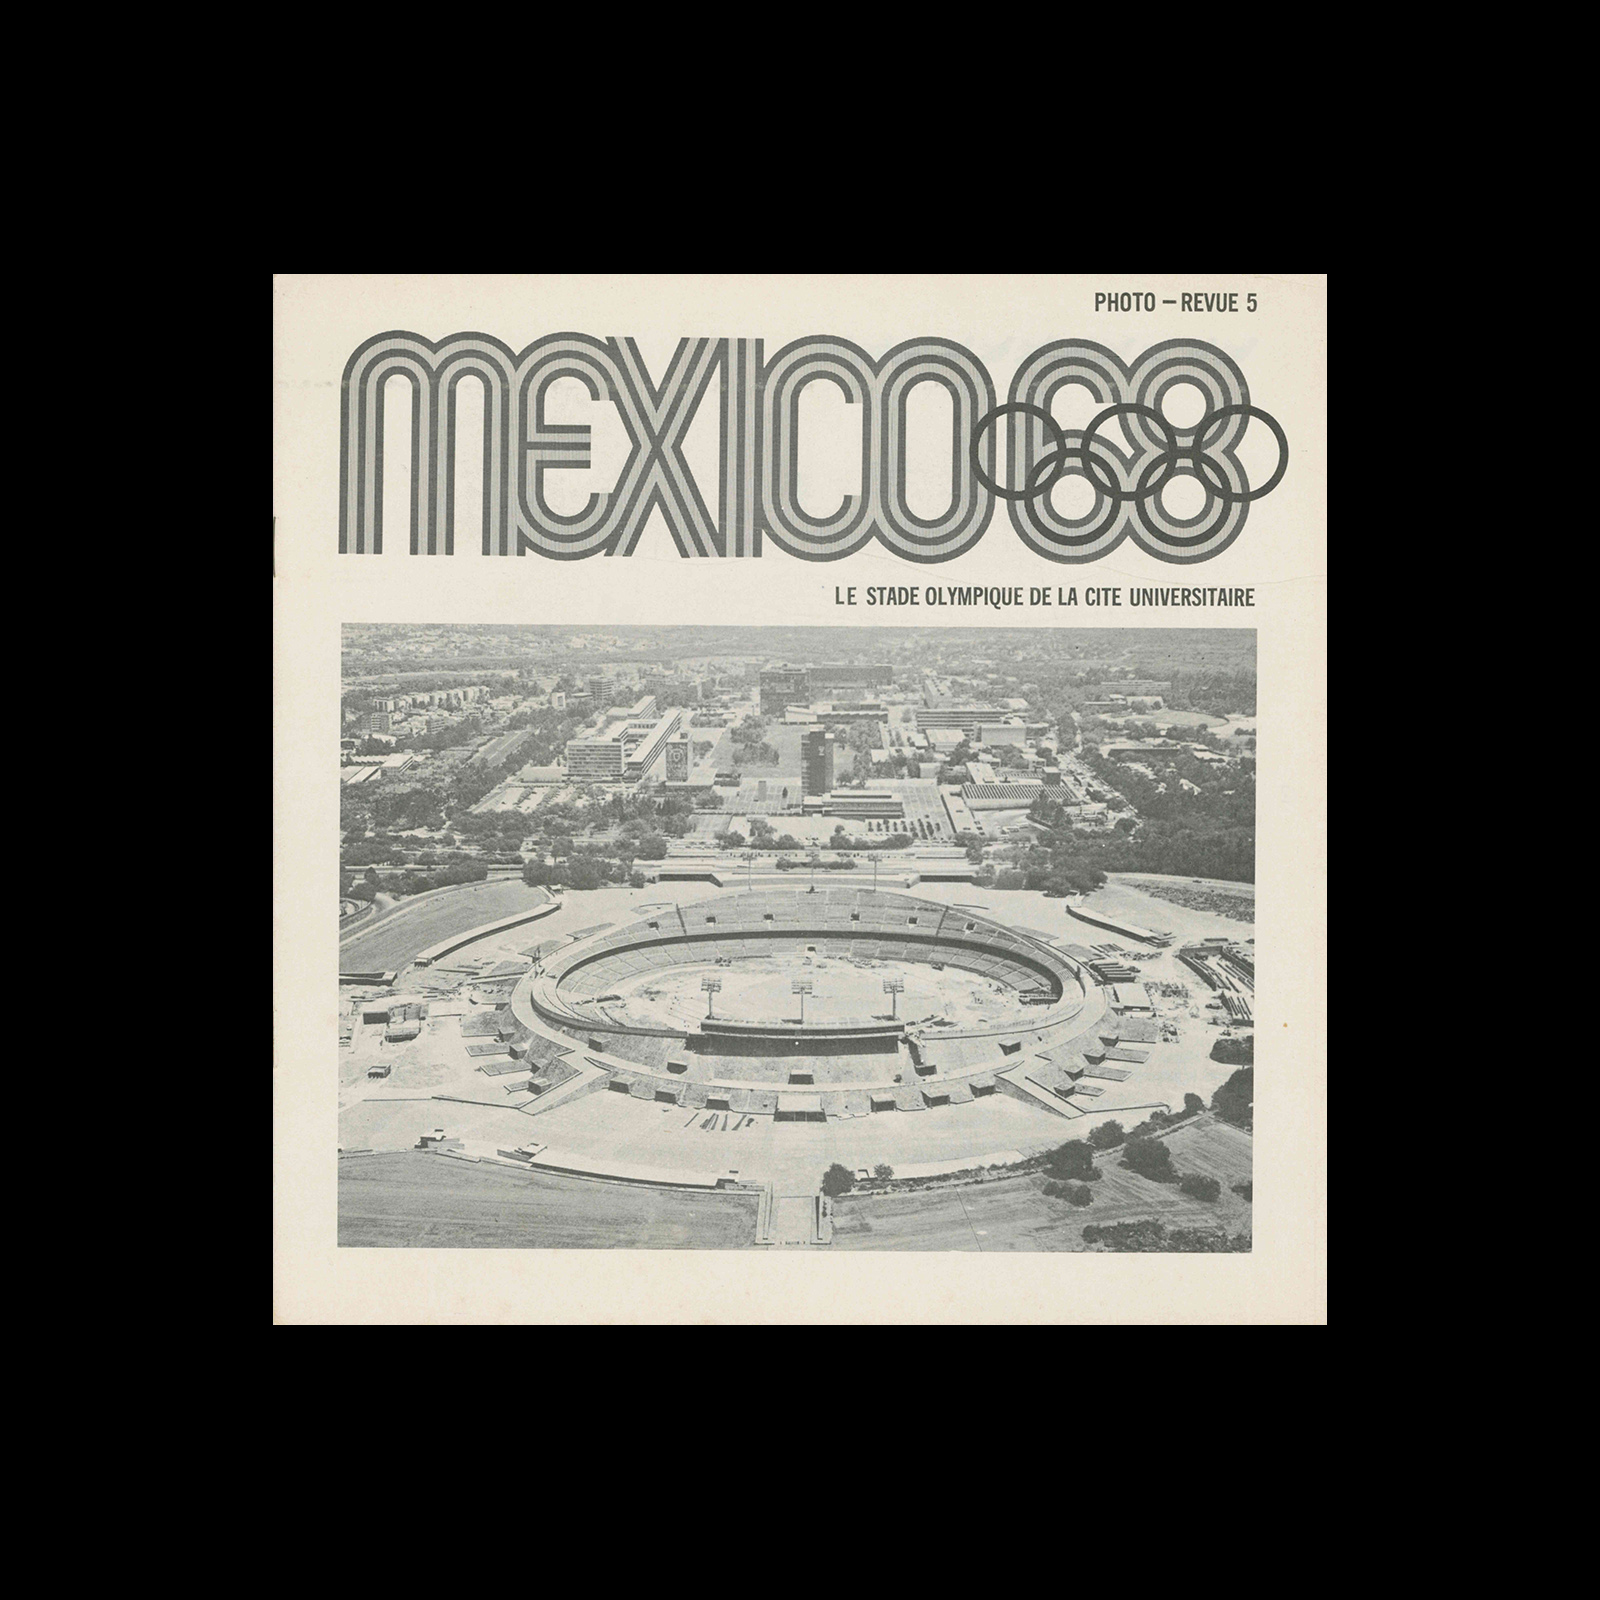 Mexico 1968, Photo - Revue 5, 1968. Designed by Lance Wyman